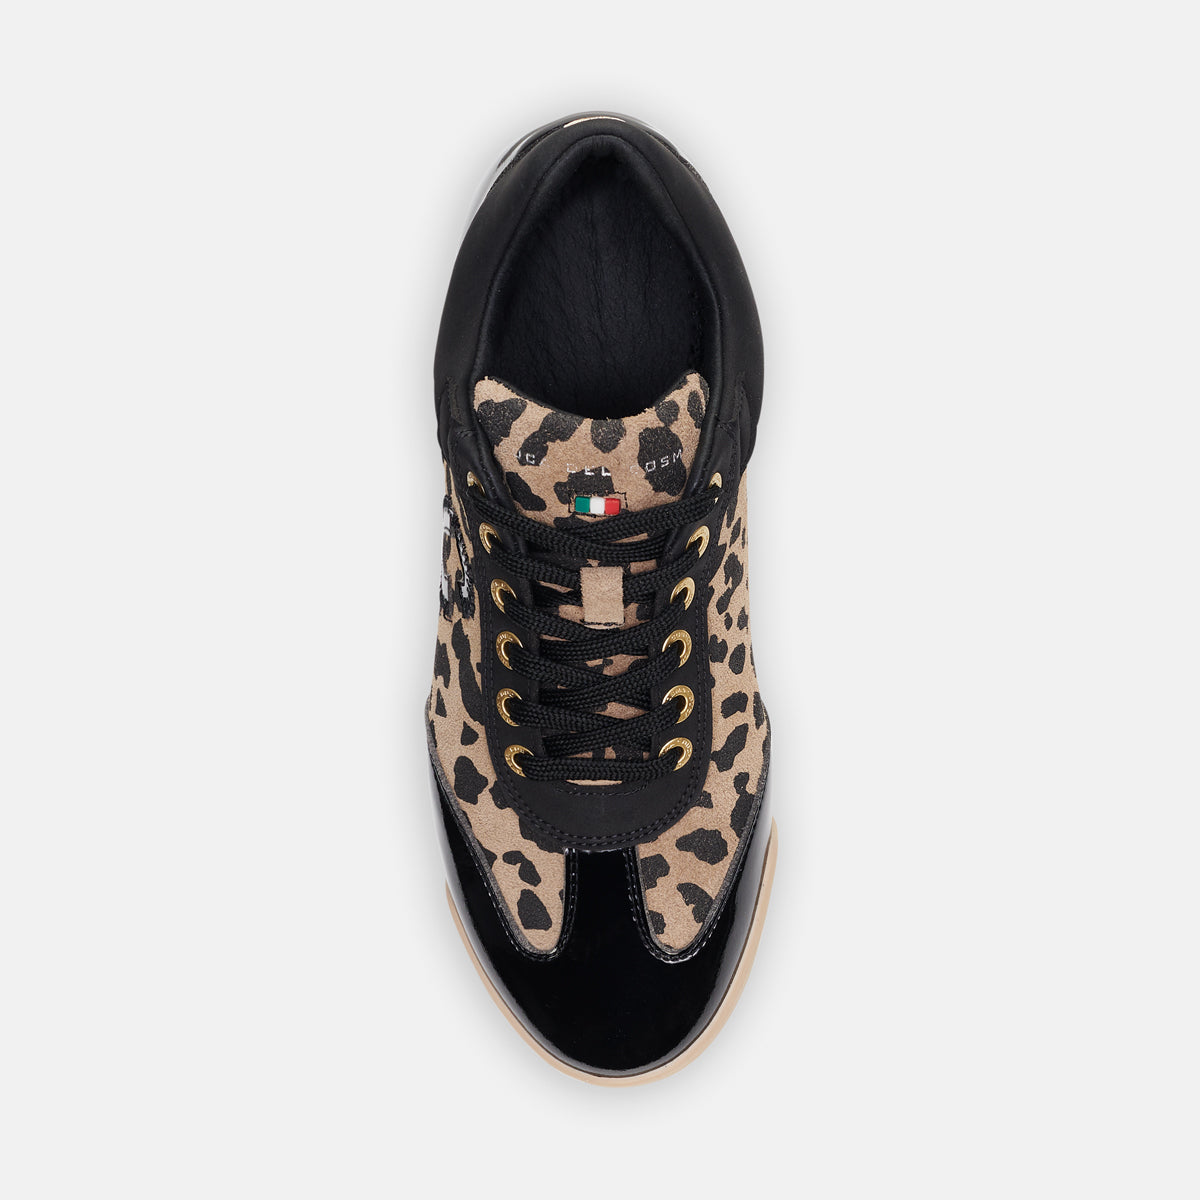 King Cheetah Black - Women's Golf Shoe 